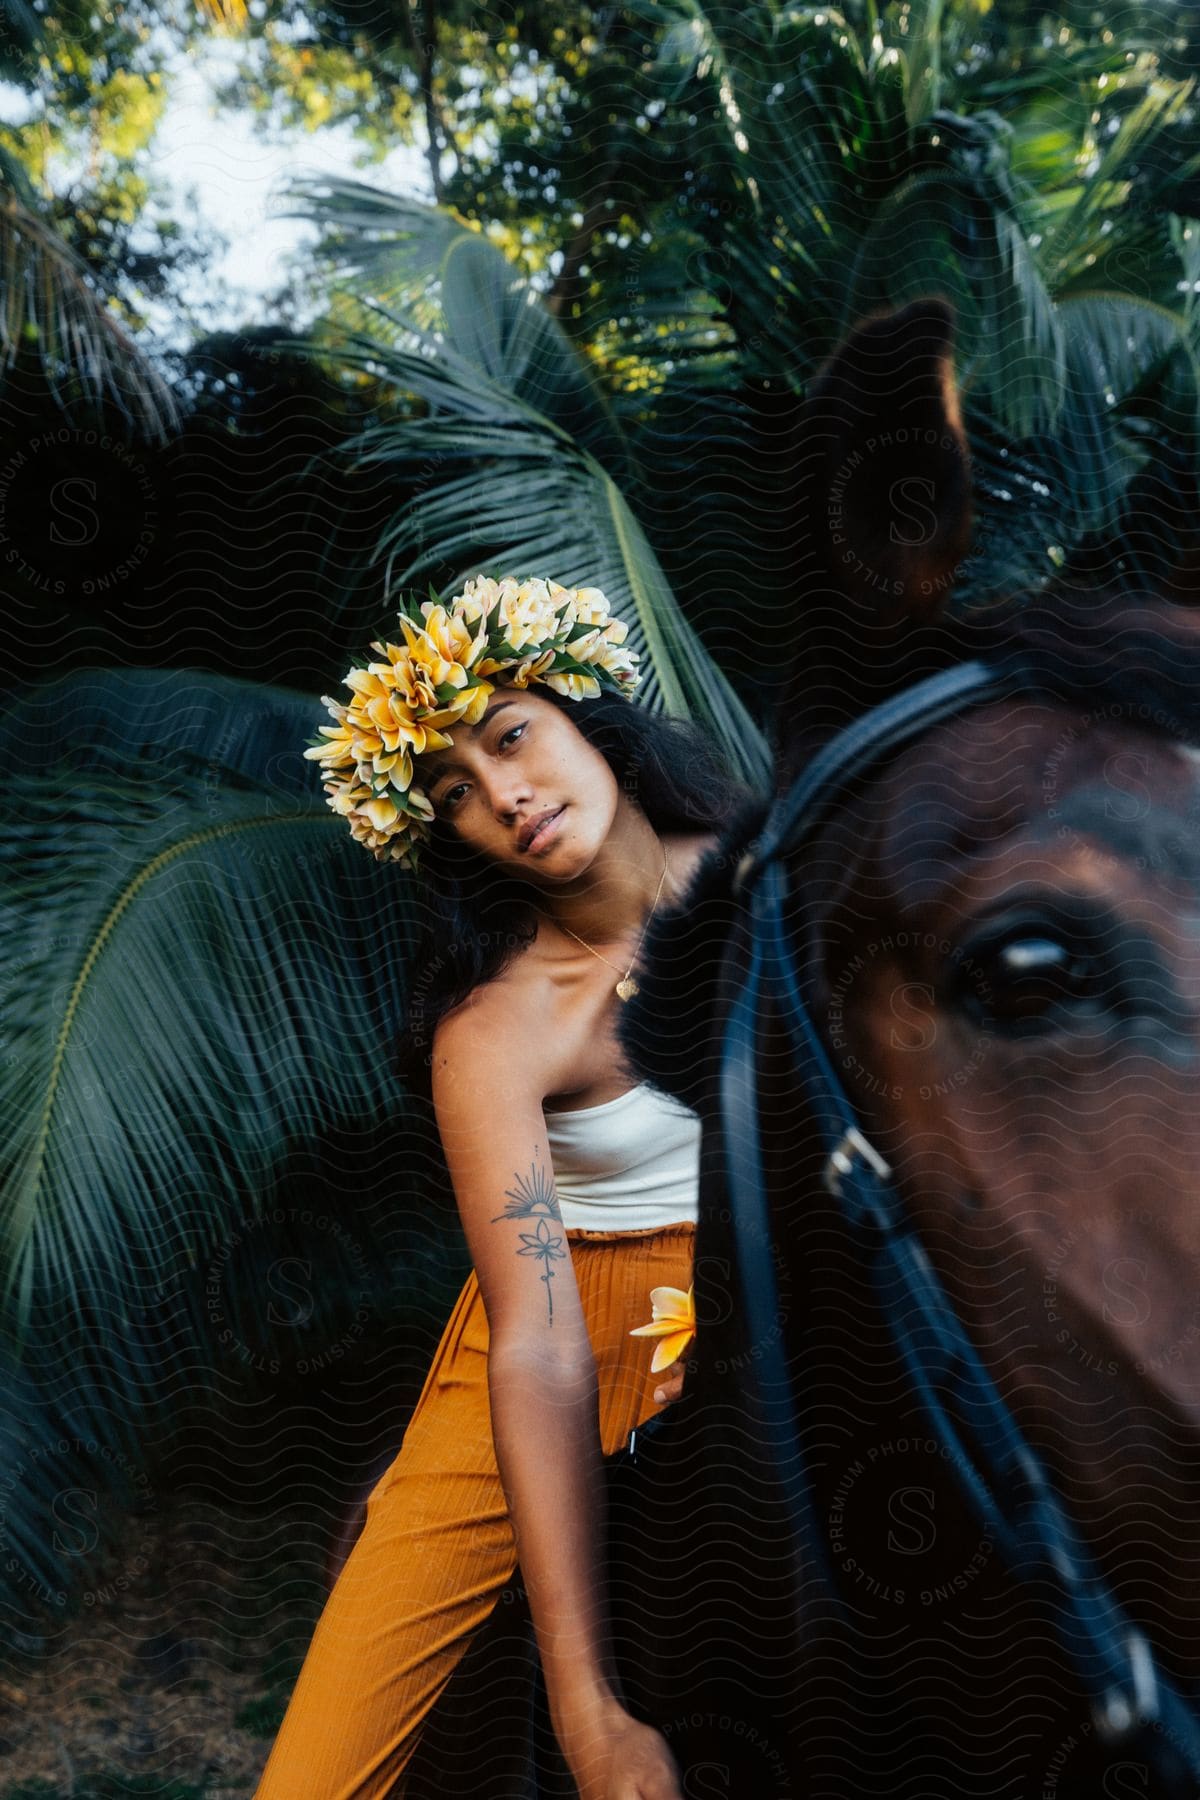 A woman riding a horse in a lush jungle